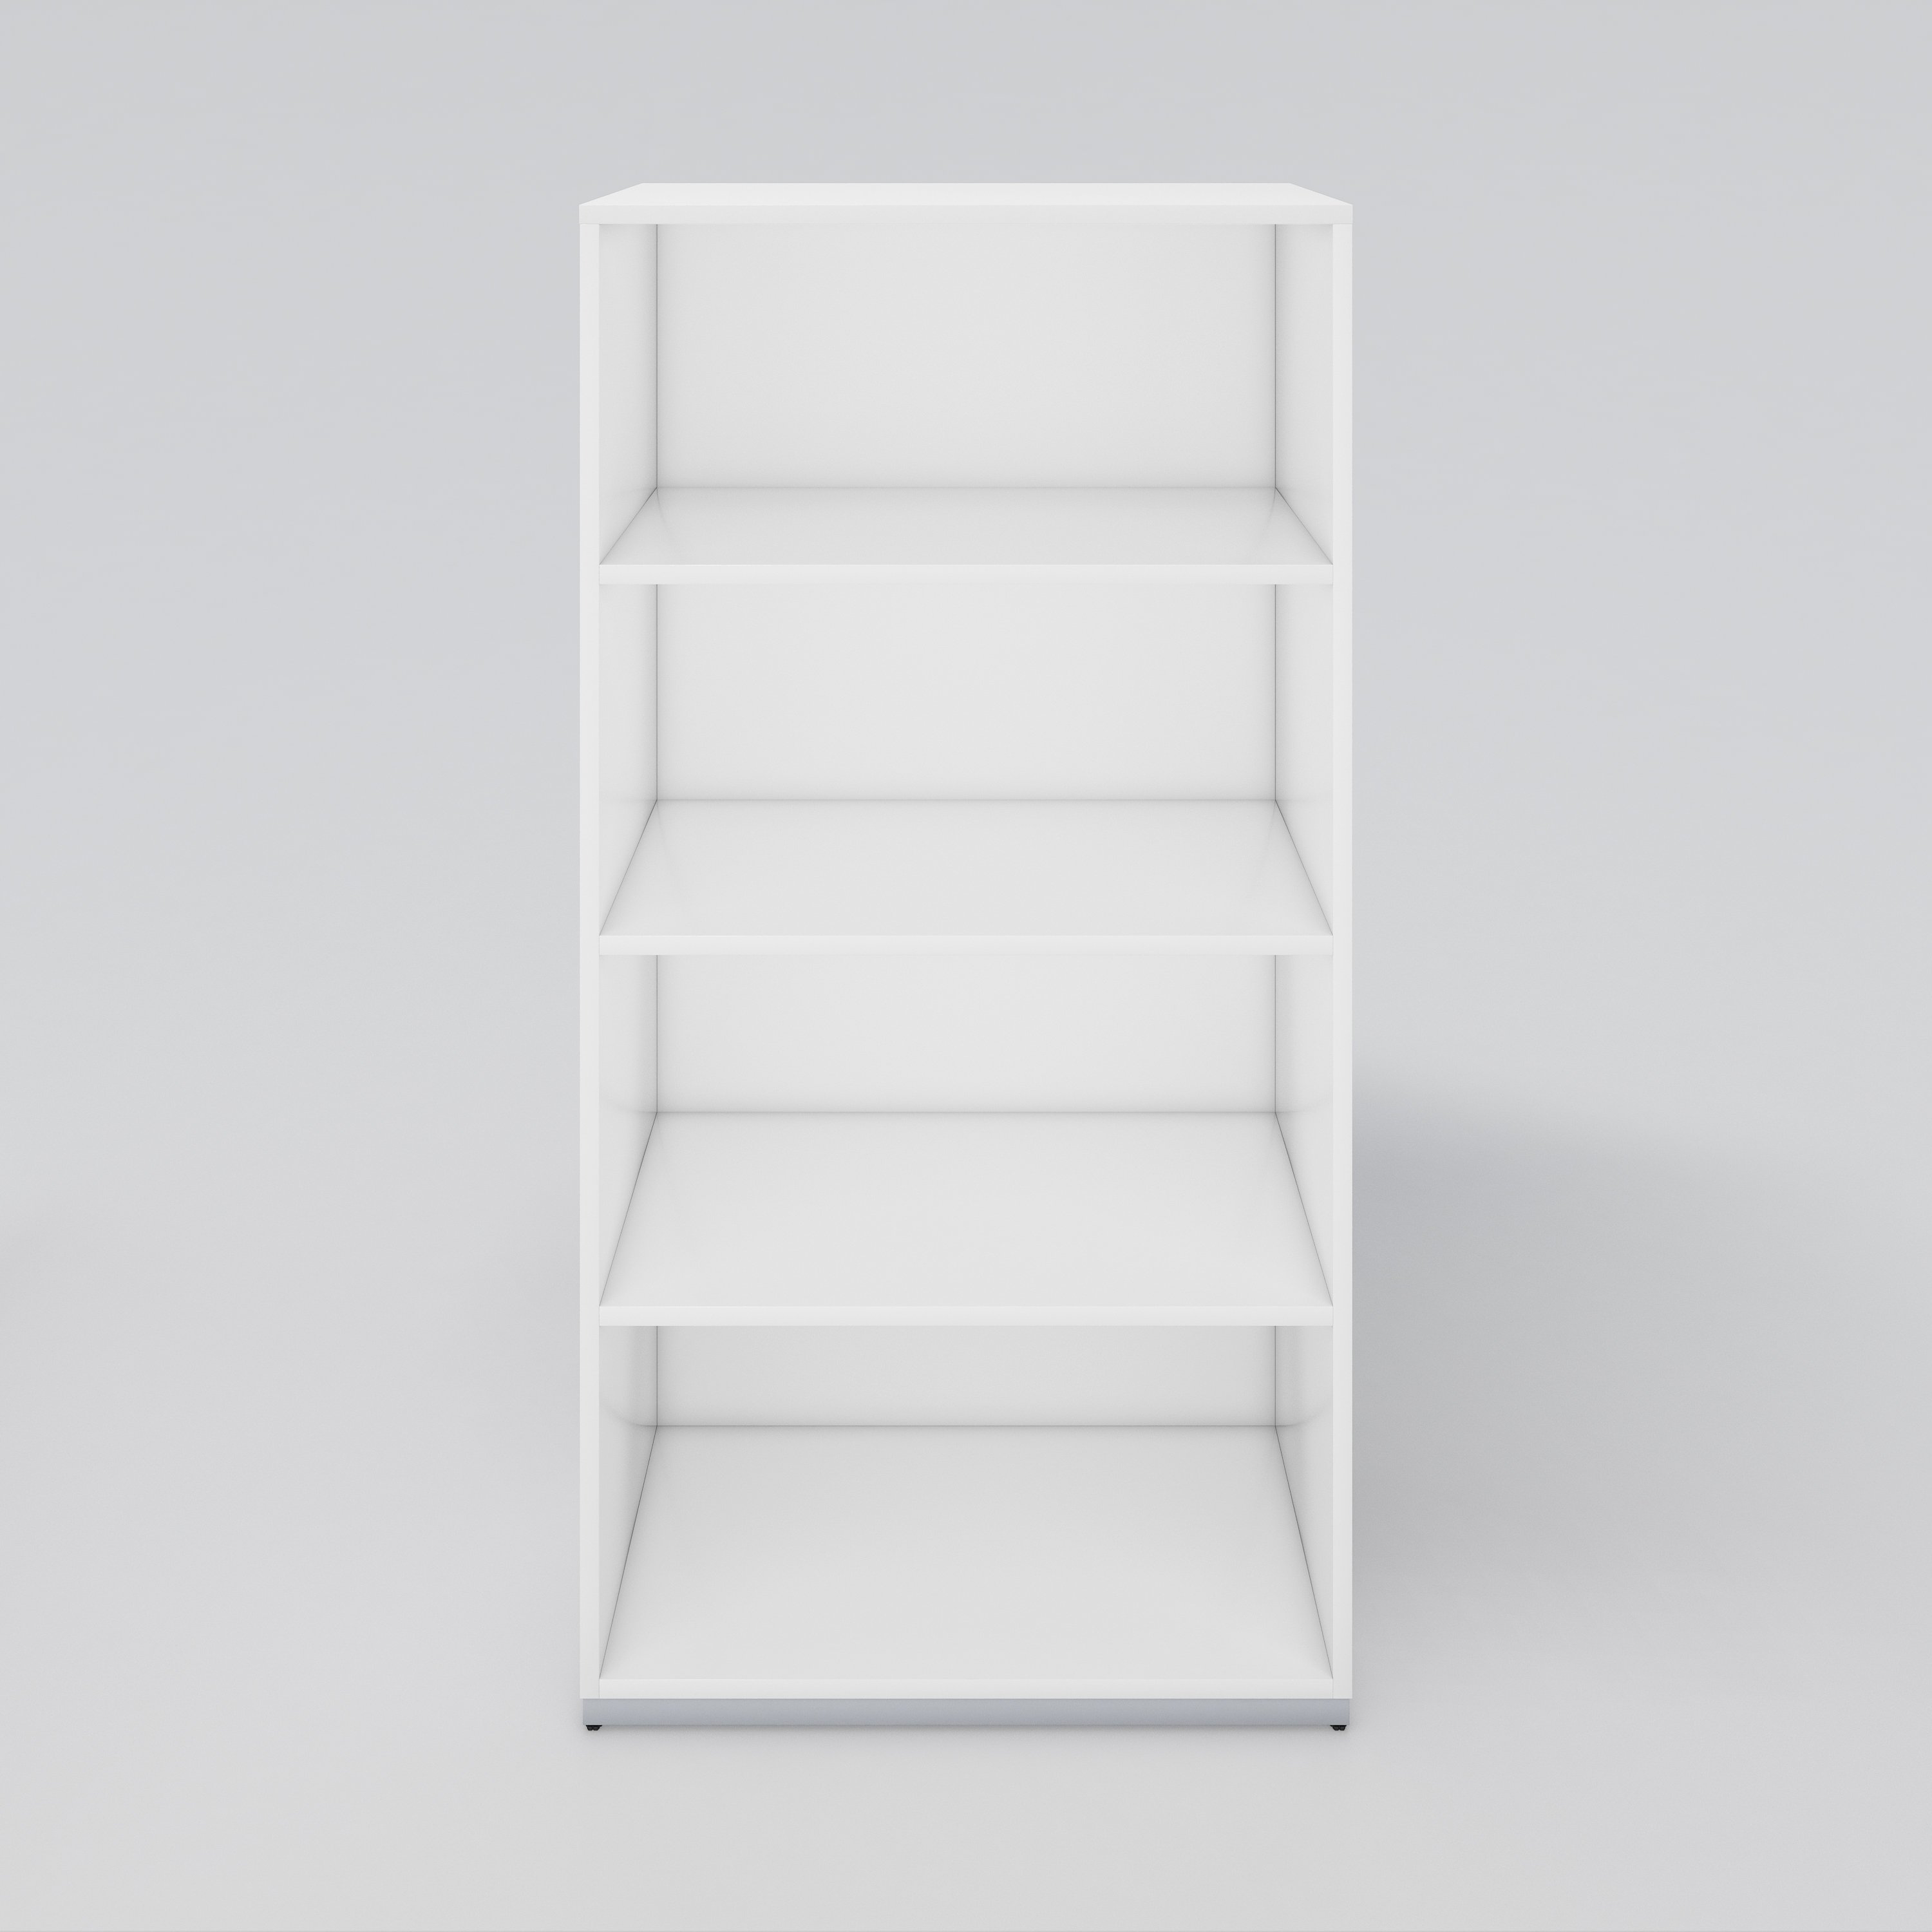 Office shelf Access, 800x1577x416, white laminate